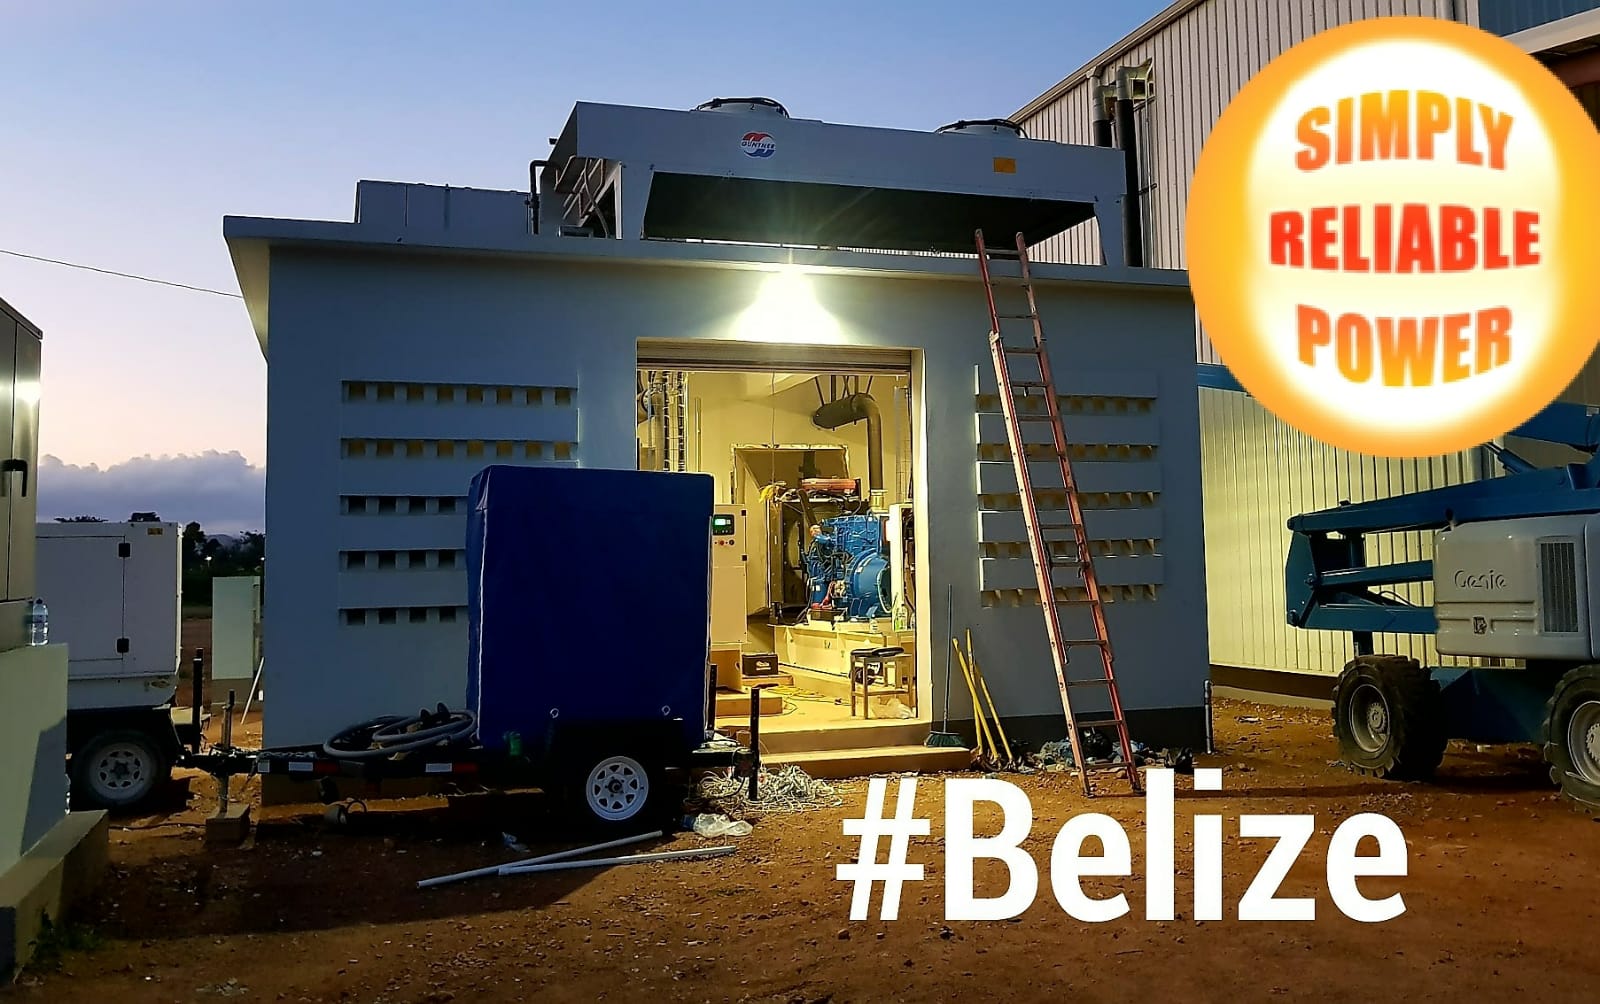 FG Wilson Generator Set in Belize